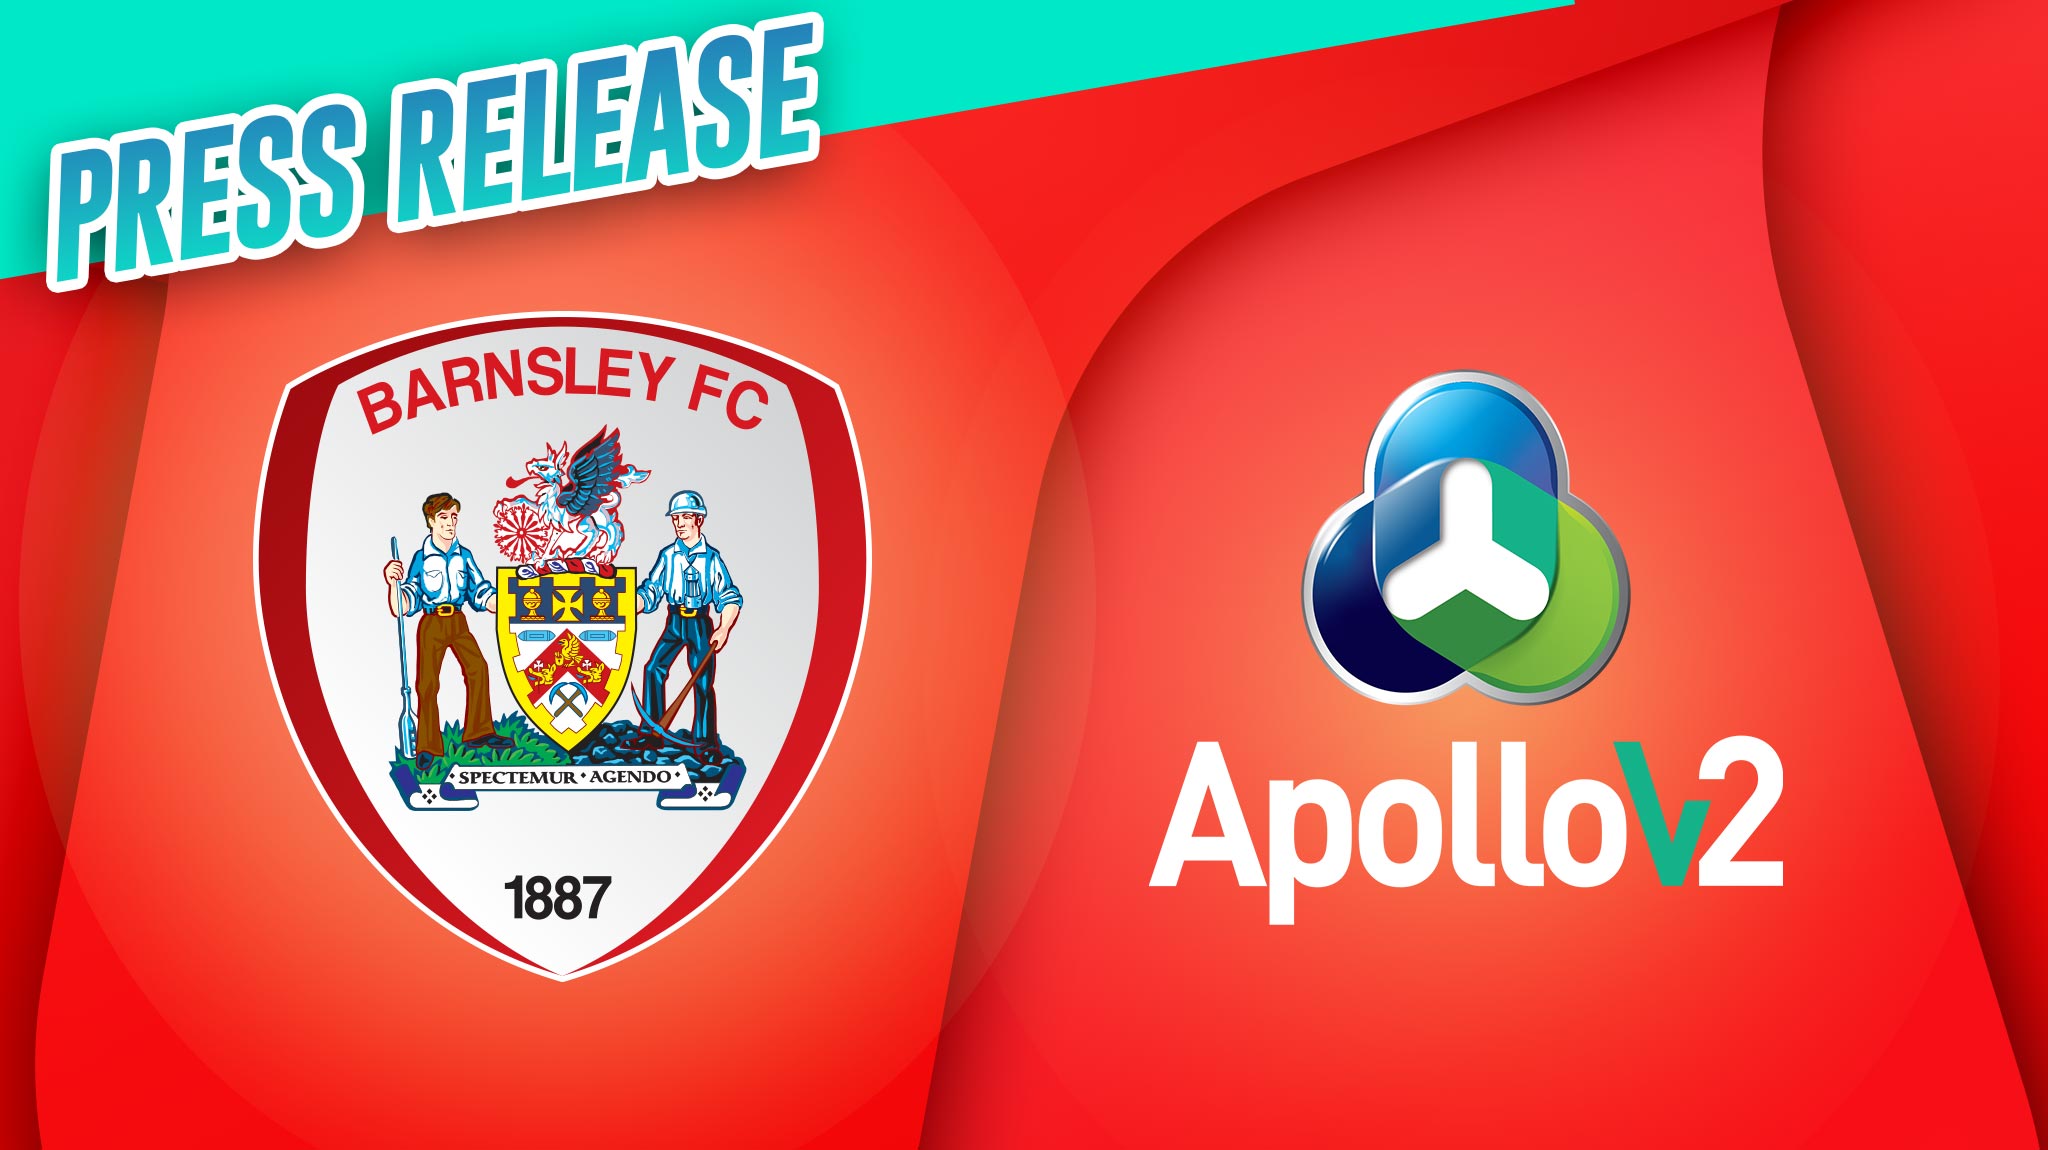 Press Release-Barnsley FC